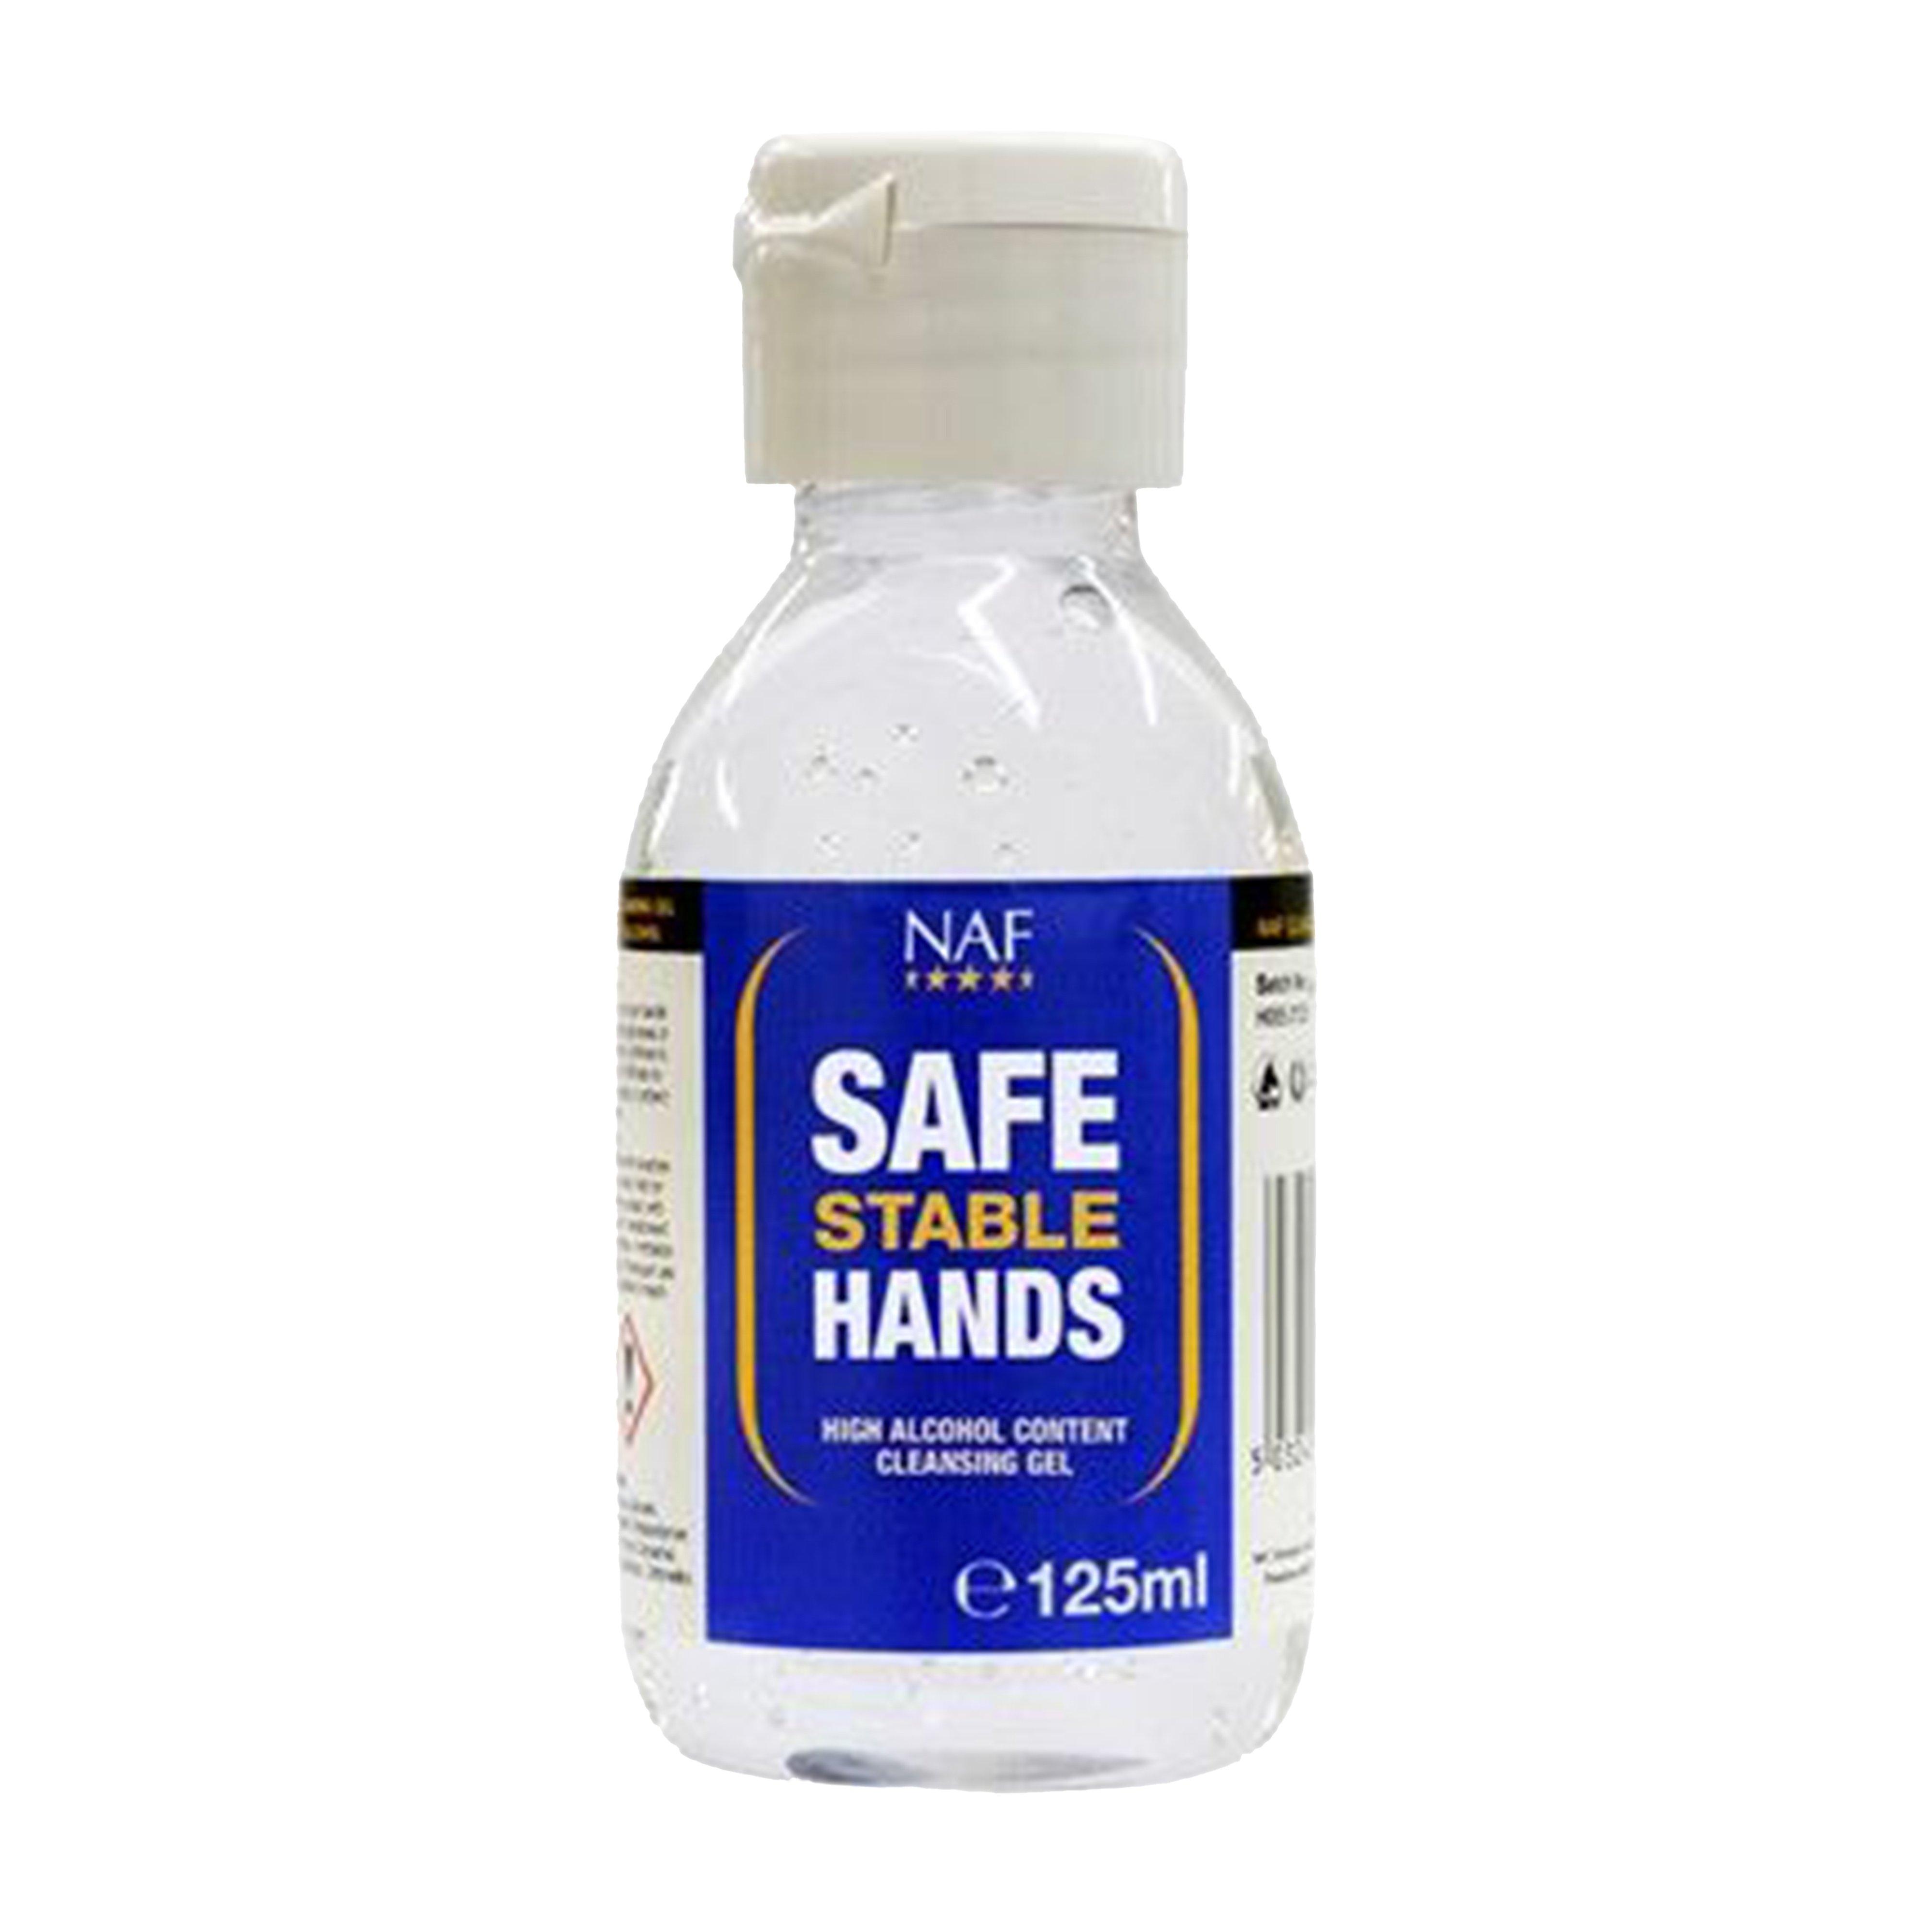 Safe Stable Hands